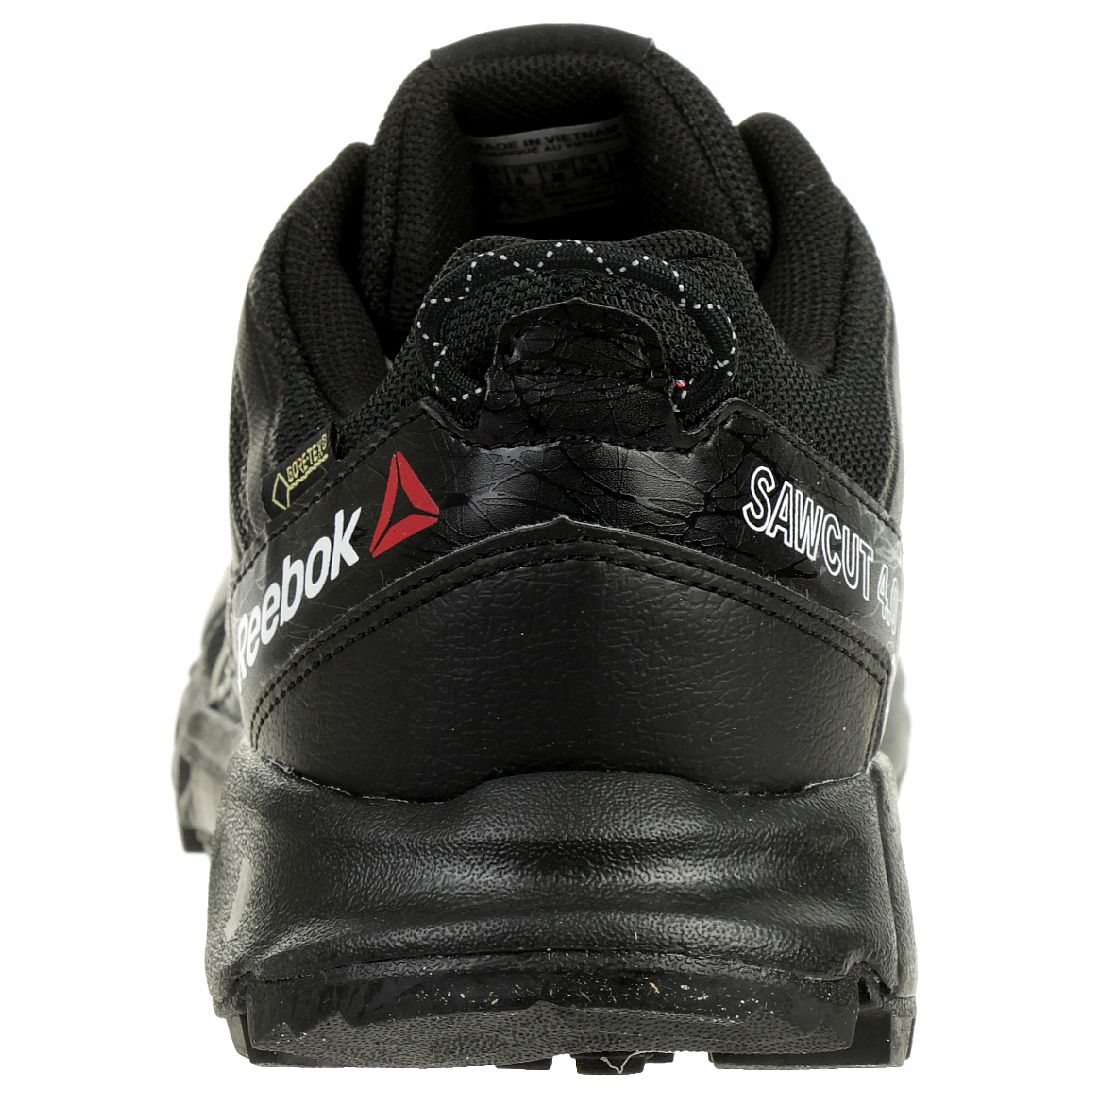 Reebok Sawcut 4.0 GTX W Damen Walk Outdoor Gore-Tex Sneaker schwarz AR2737